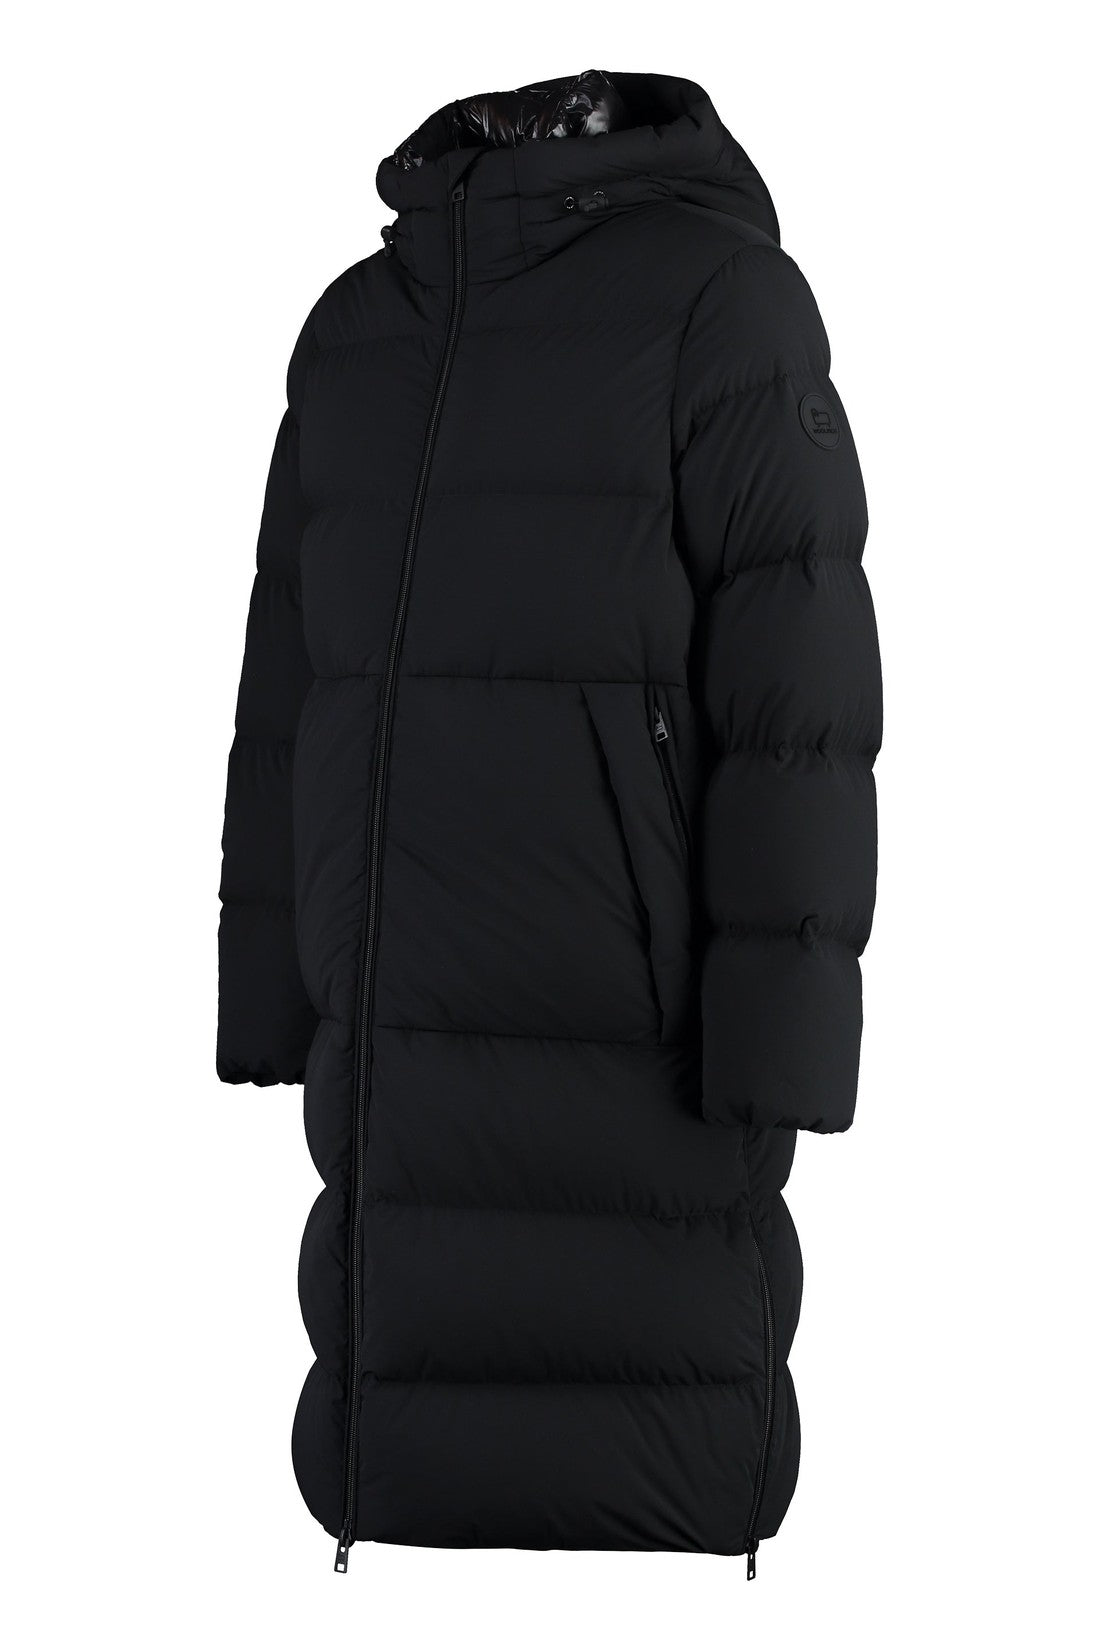 Woolrich-OUTLET-SALE-Sierra Supreme long hooded down jacket-ARCHIVIST